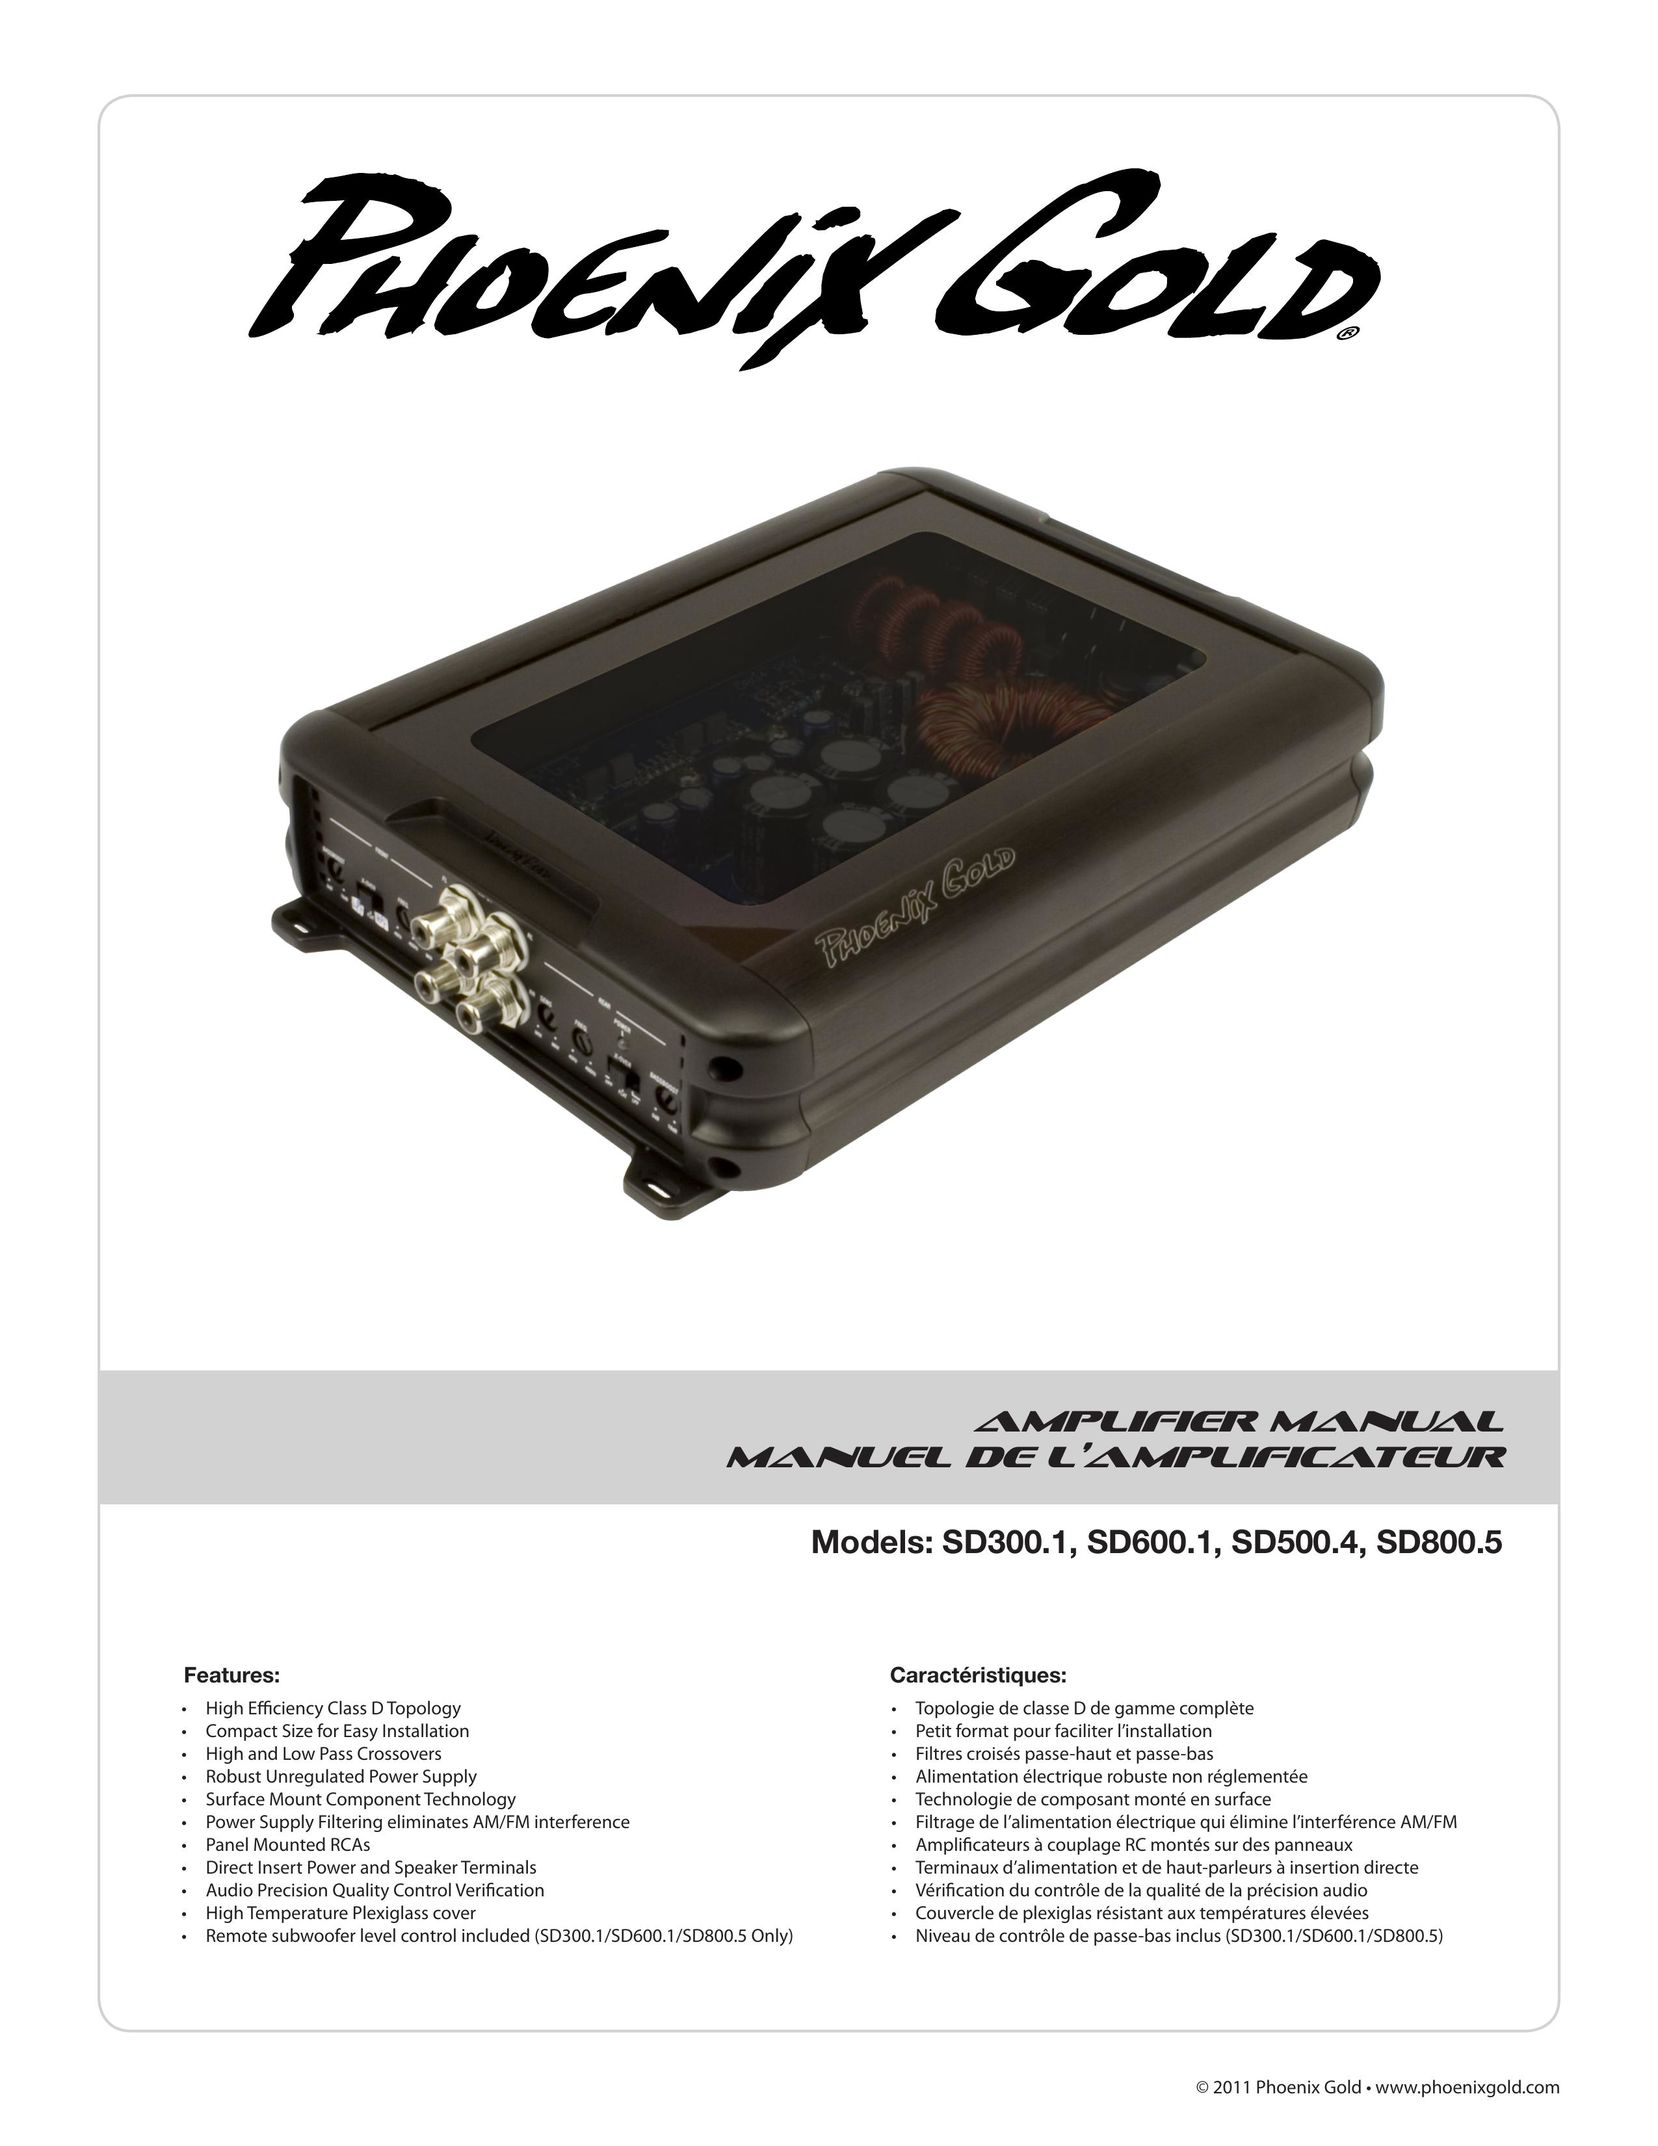 Phoenix Gold SD300.1 Car Amplifier User Manual